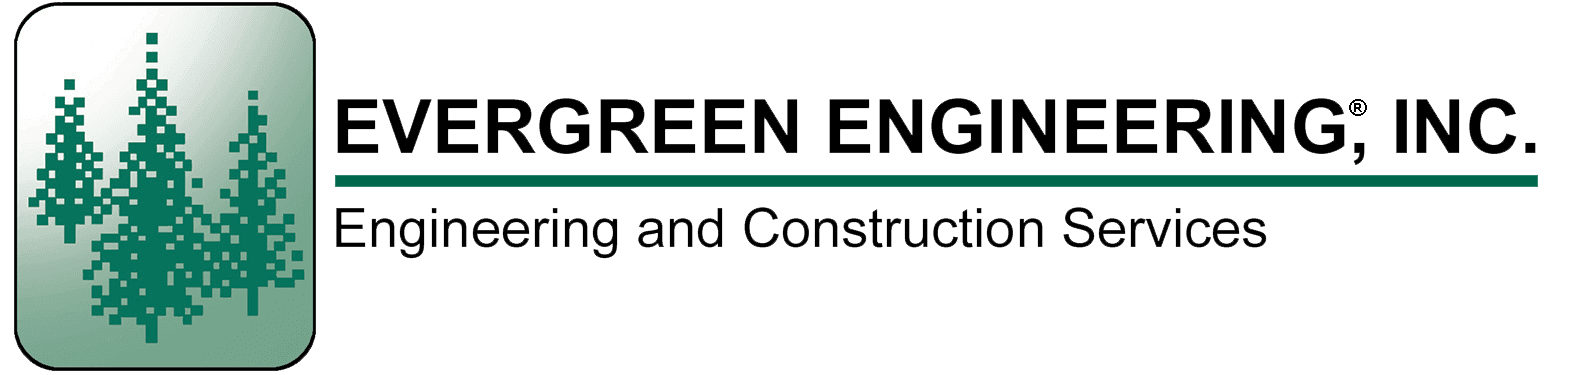 Evergreen Engineering, Inc.